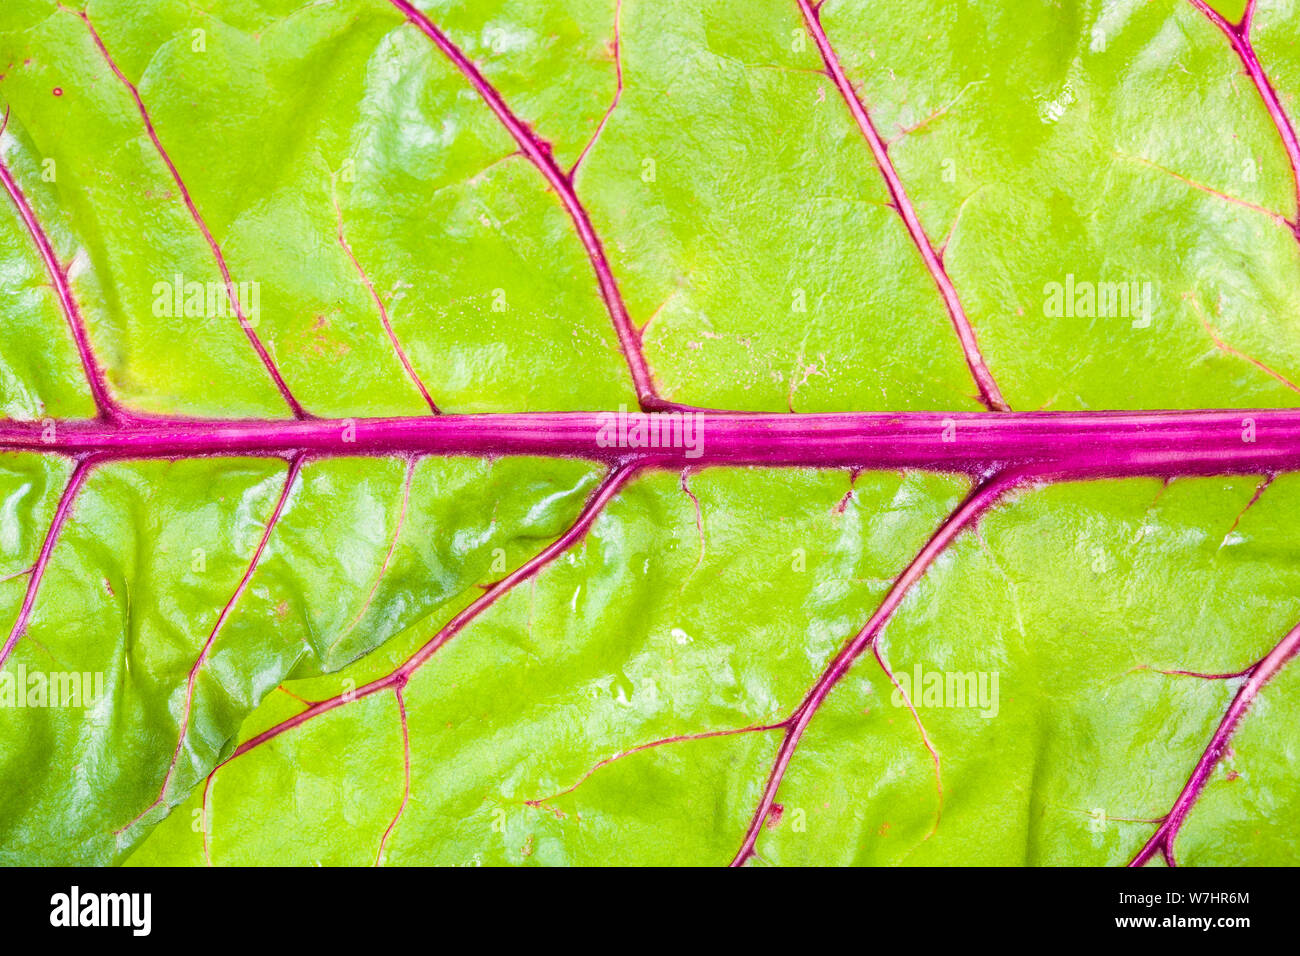 natural background - wet natural leaf of garden beet close-up Stock Photo